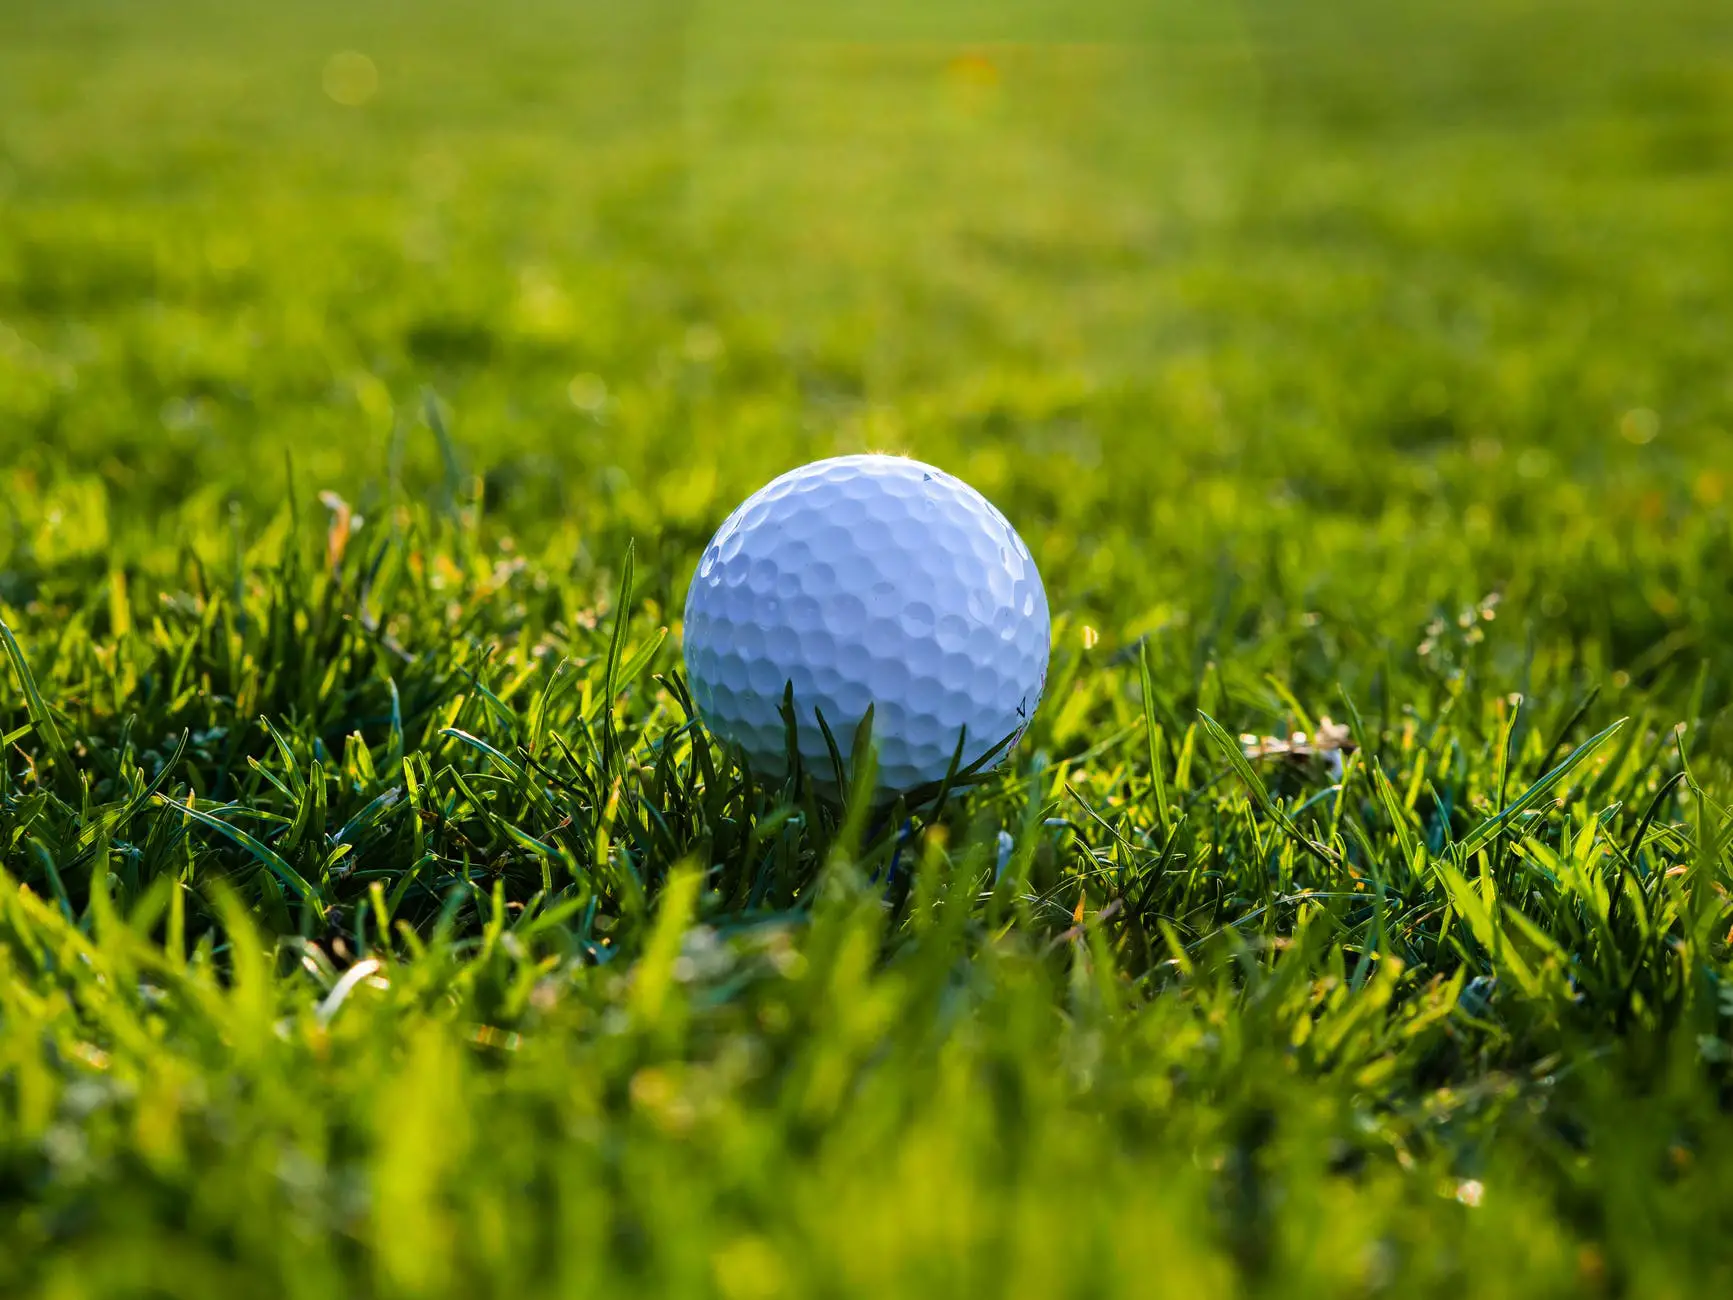 a white golf ball on the green grass